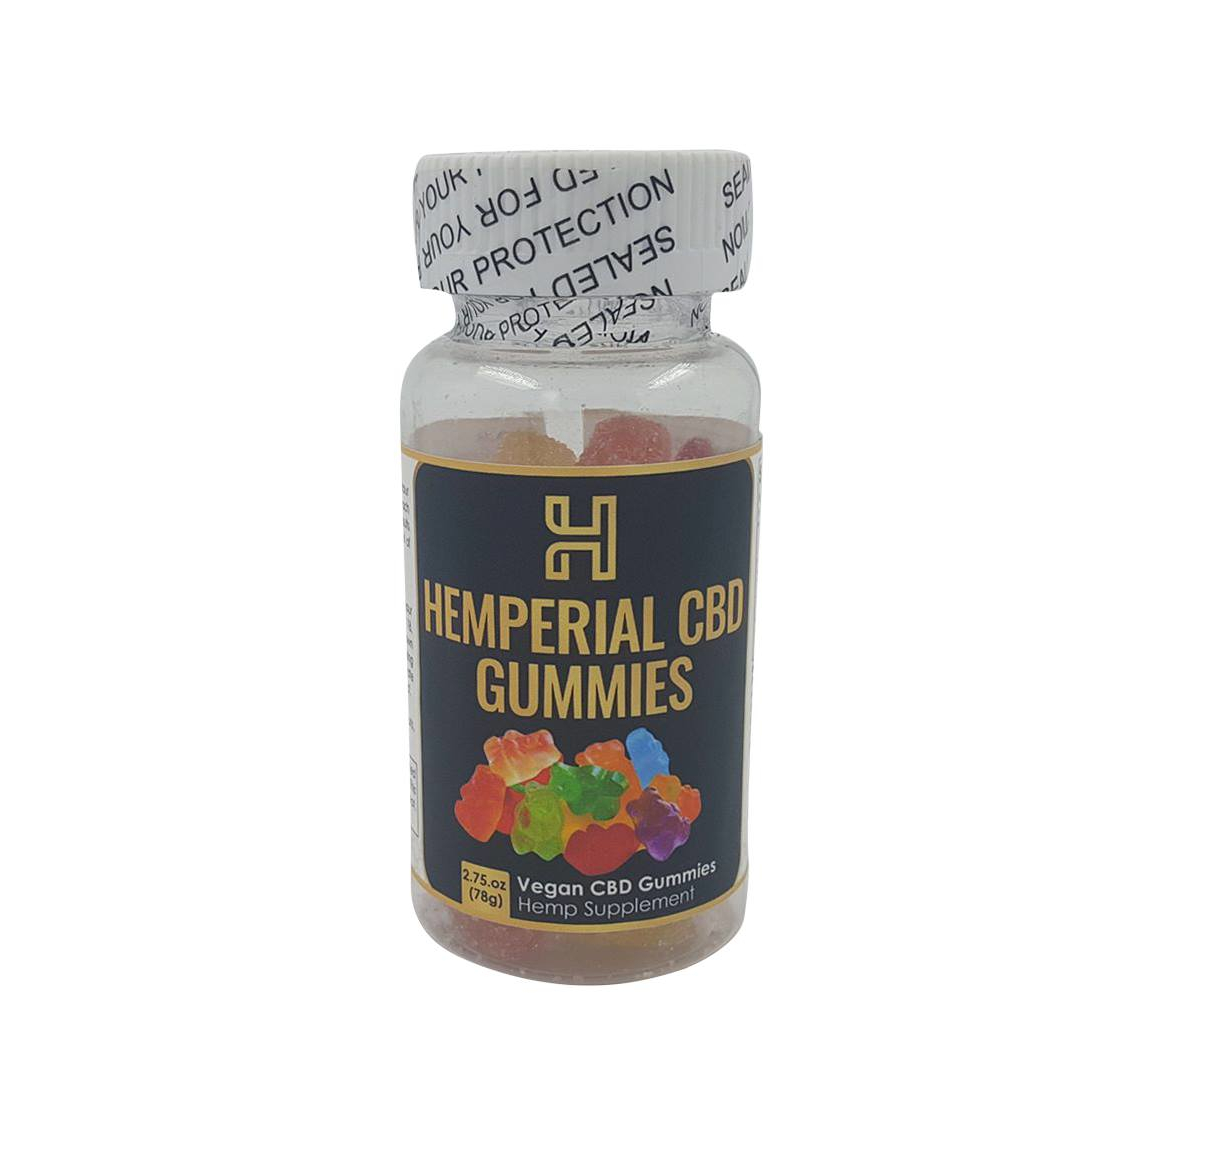 30mg CBD Gummies, 30 Count - Hemperial CBD